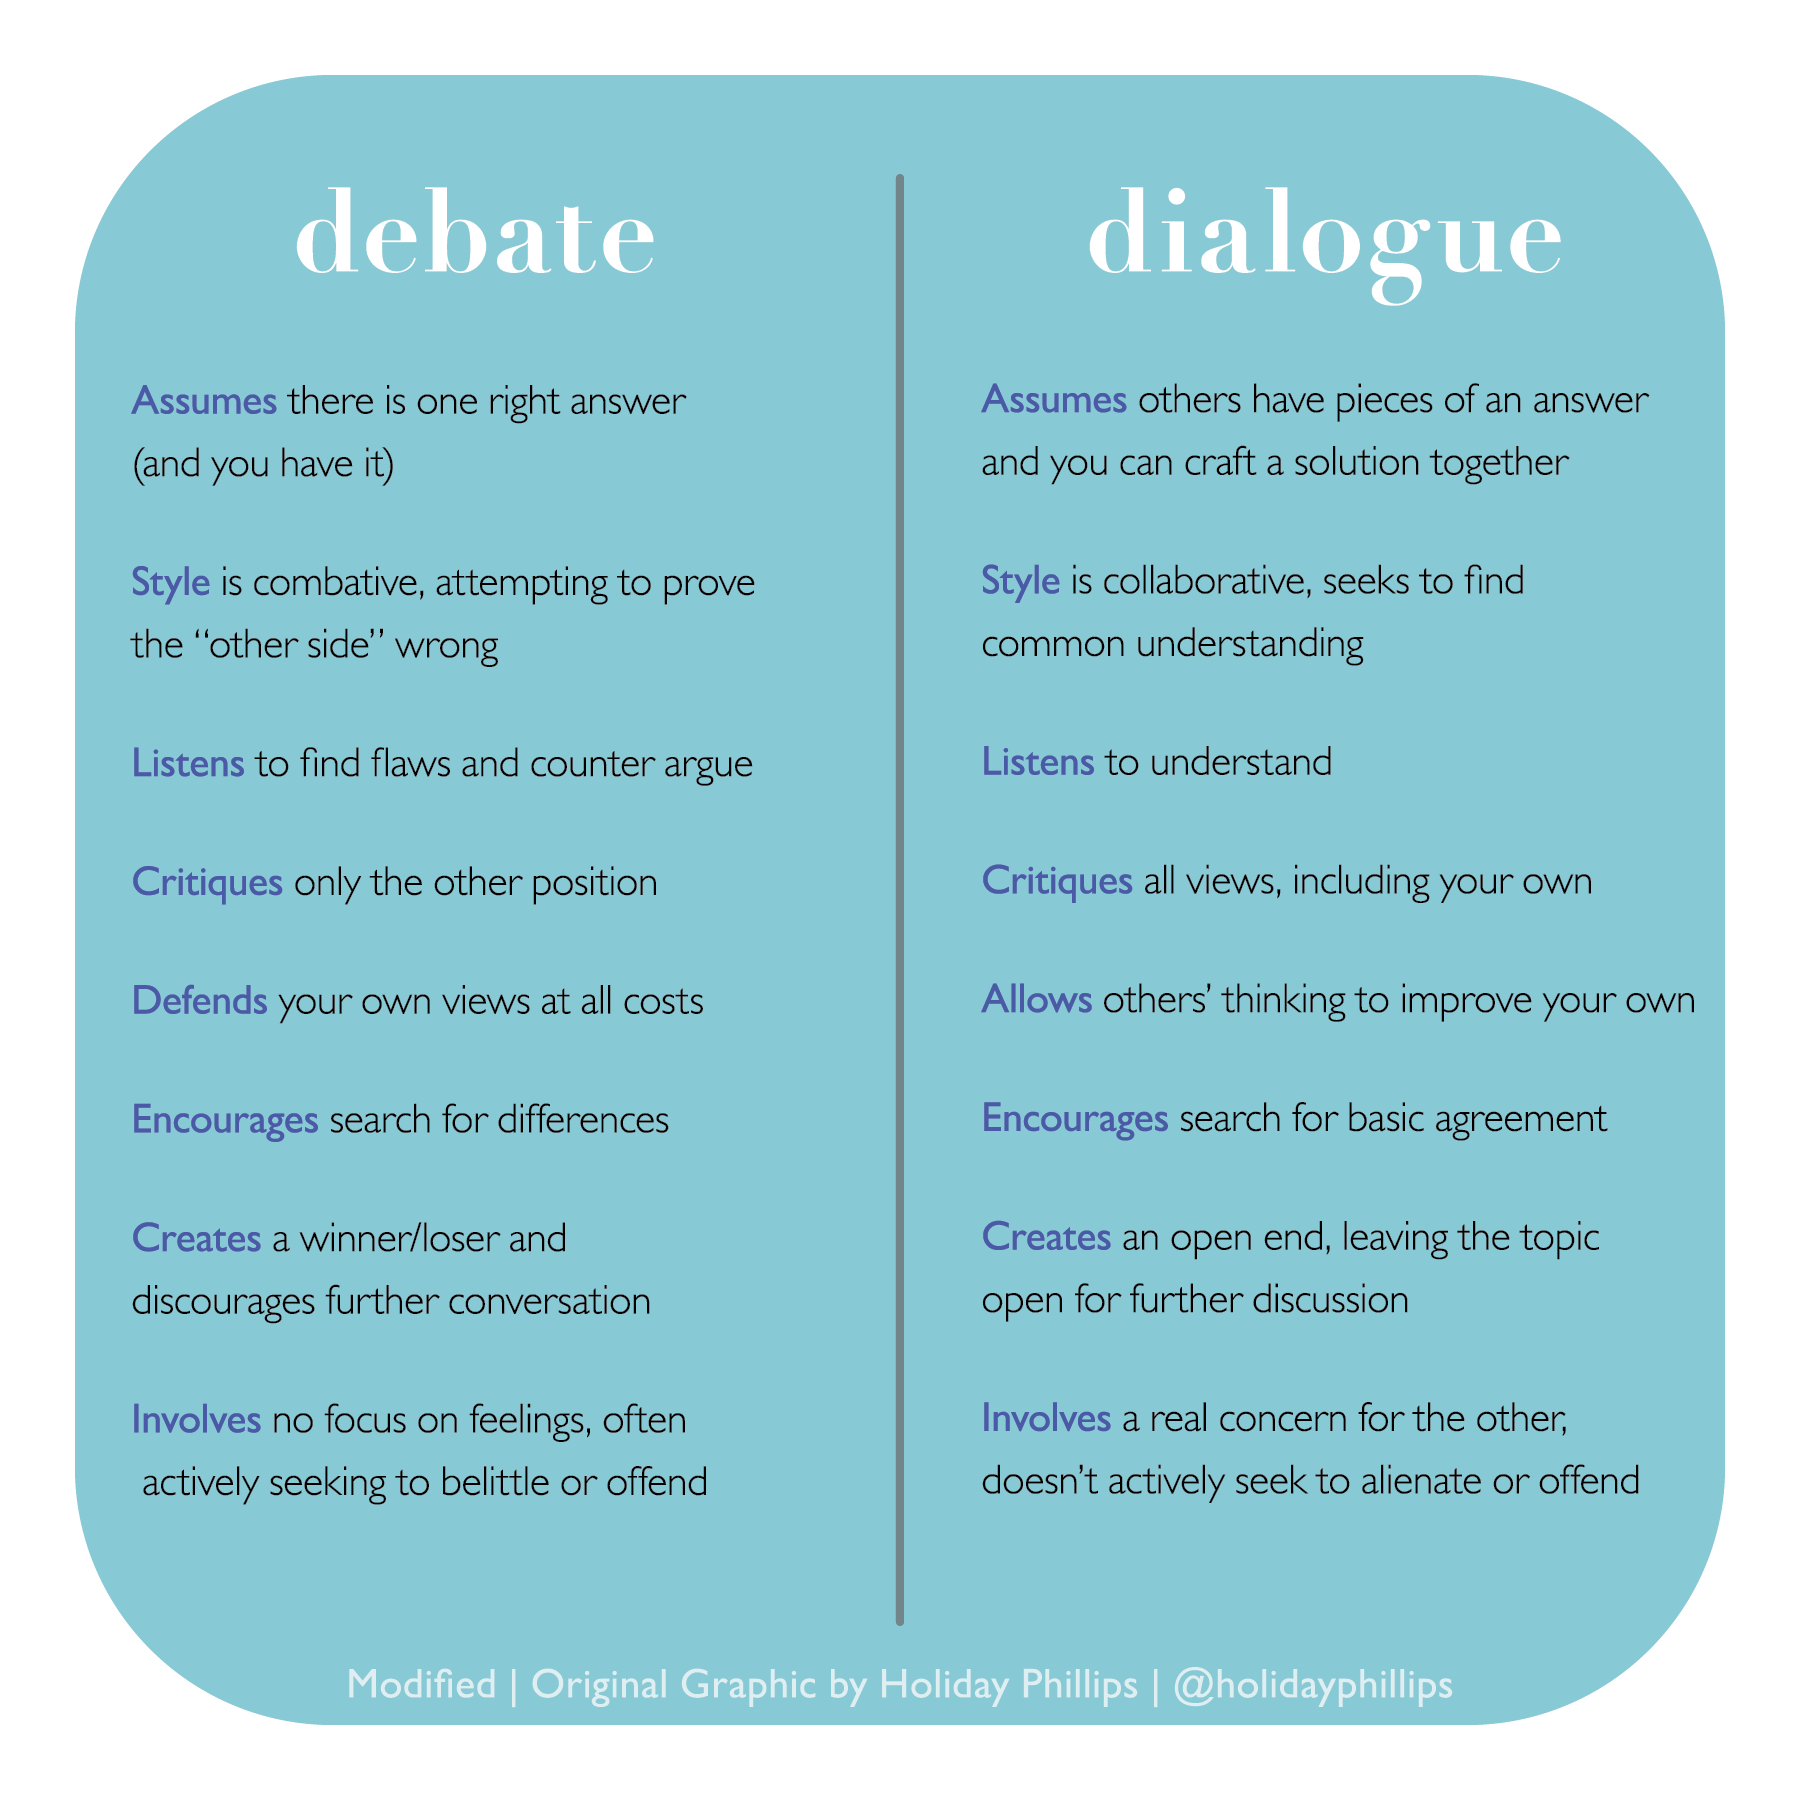 debate vs dialogue, image description linked to in caption